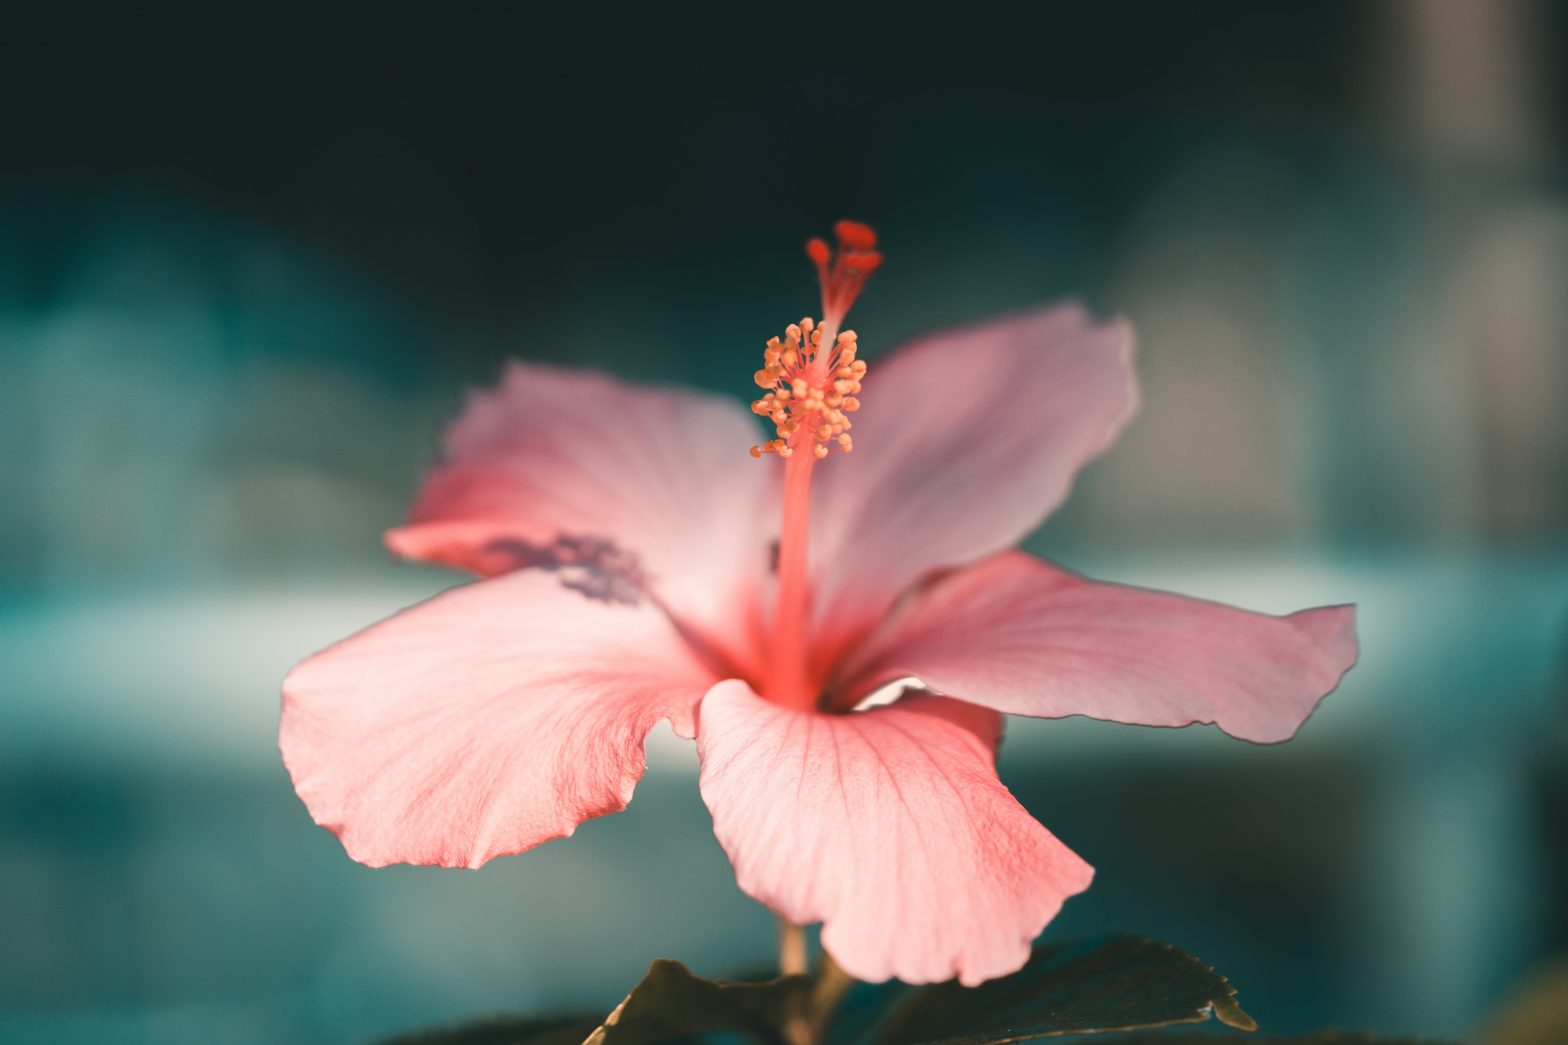 Photo of hibiscus flower by John Wilander on Unsplash